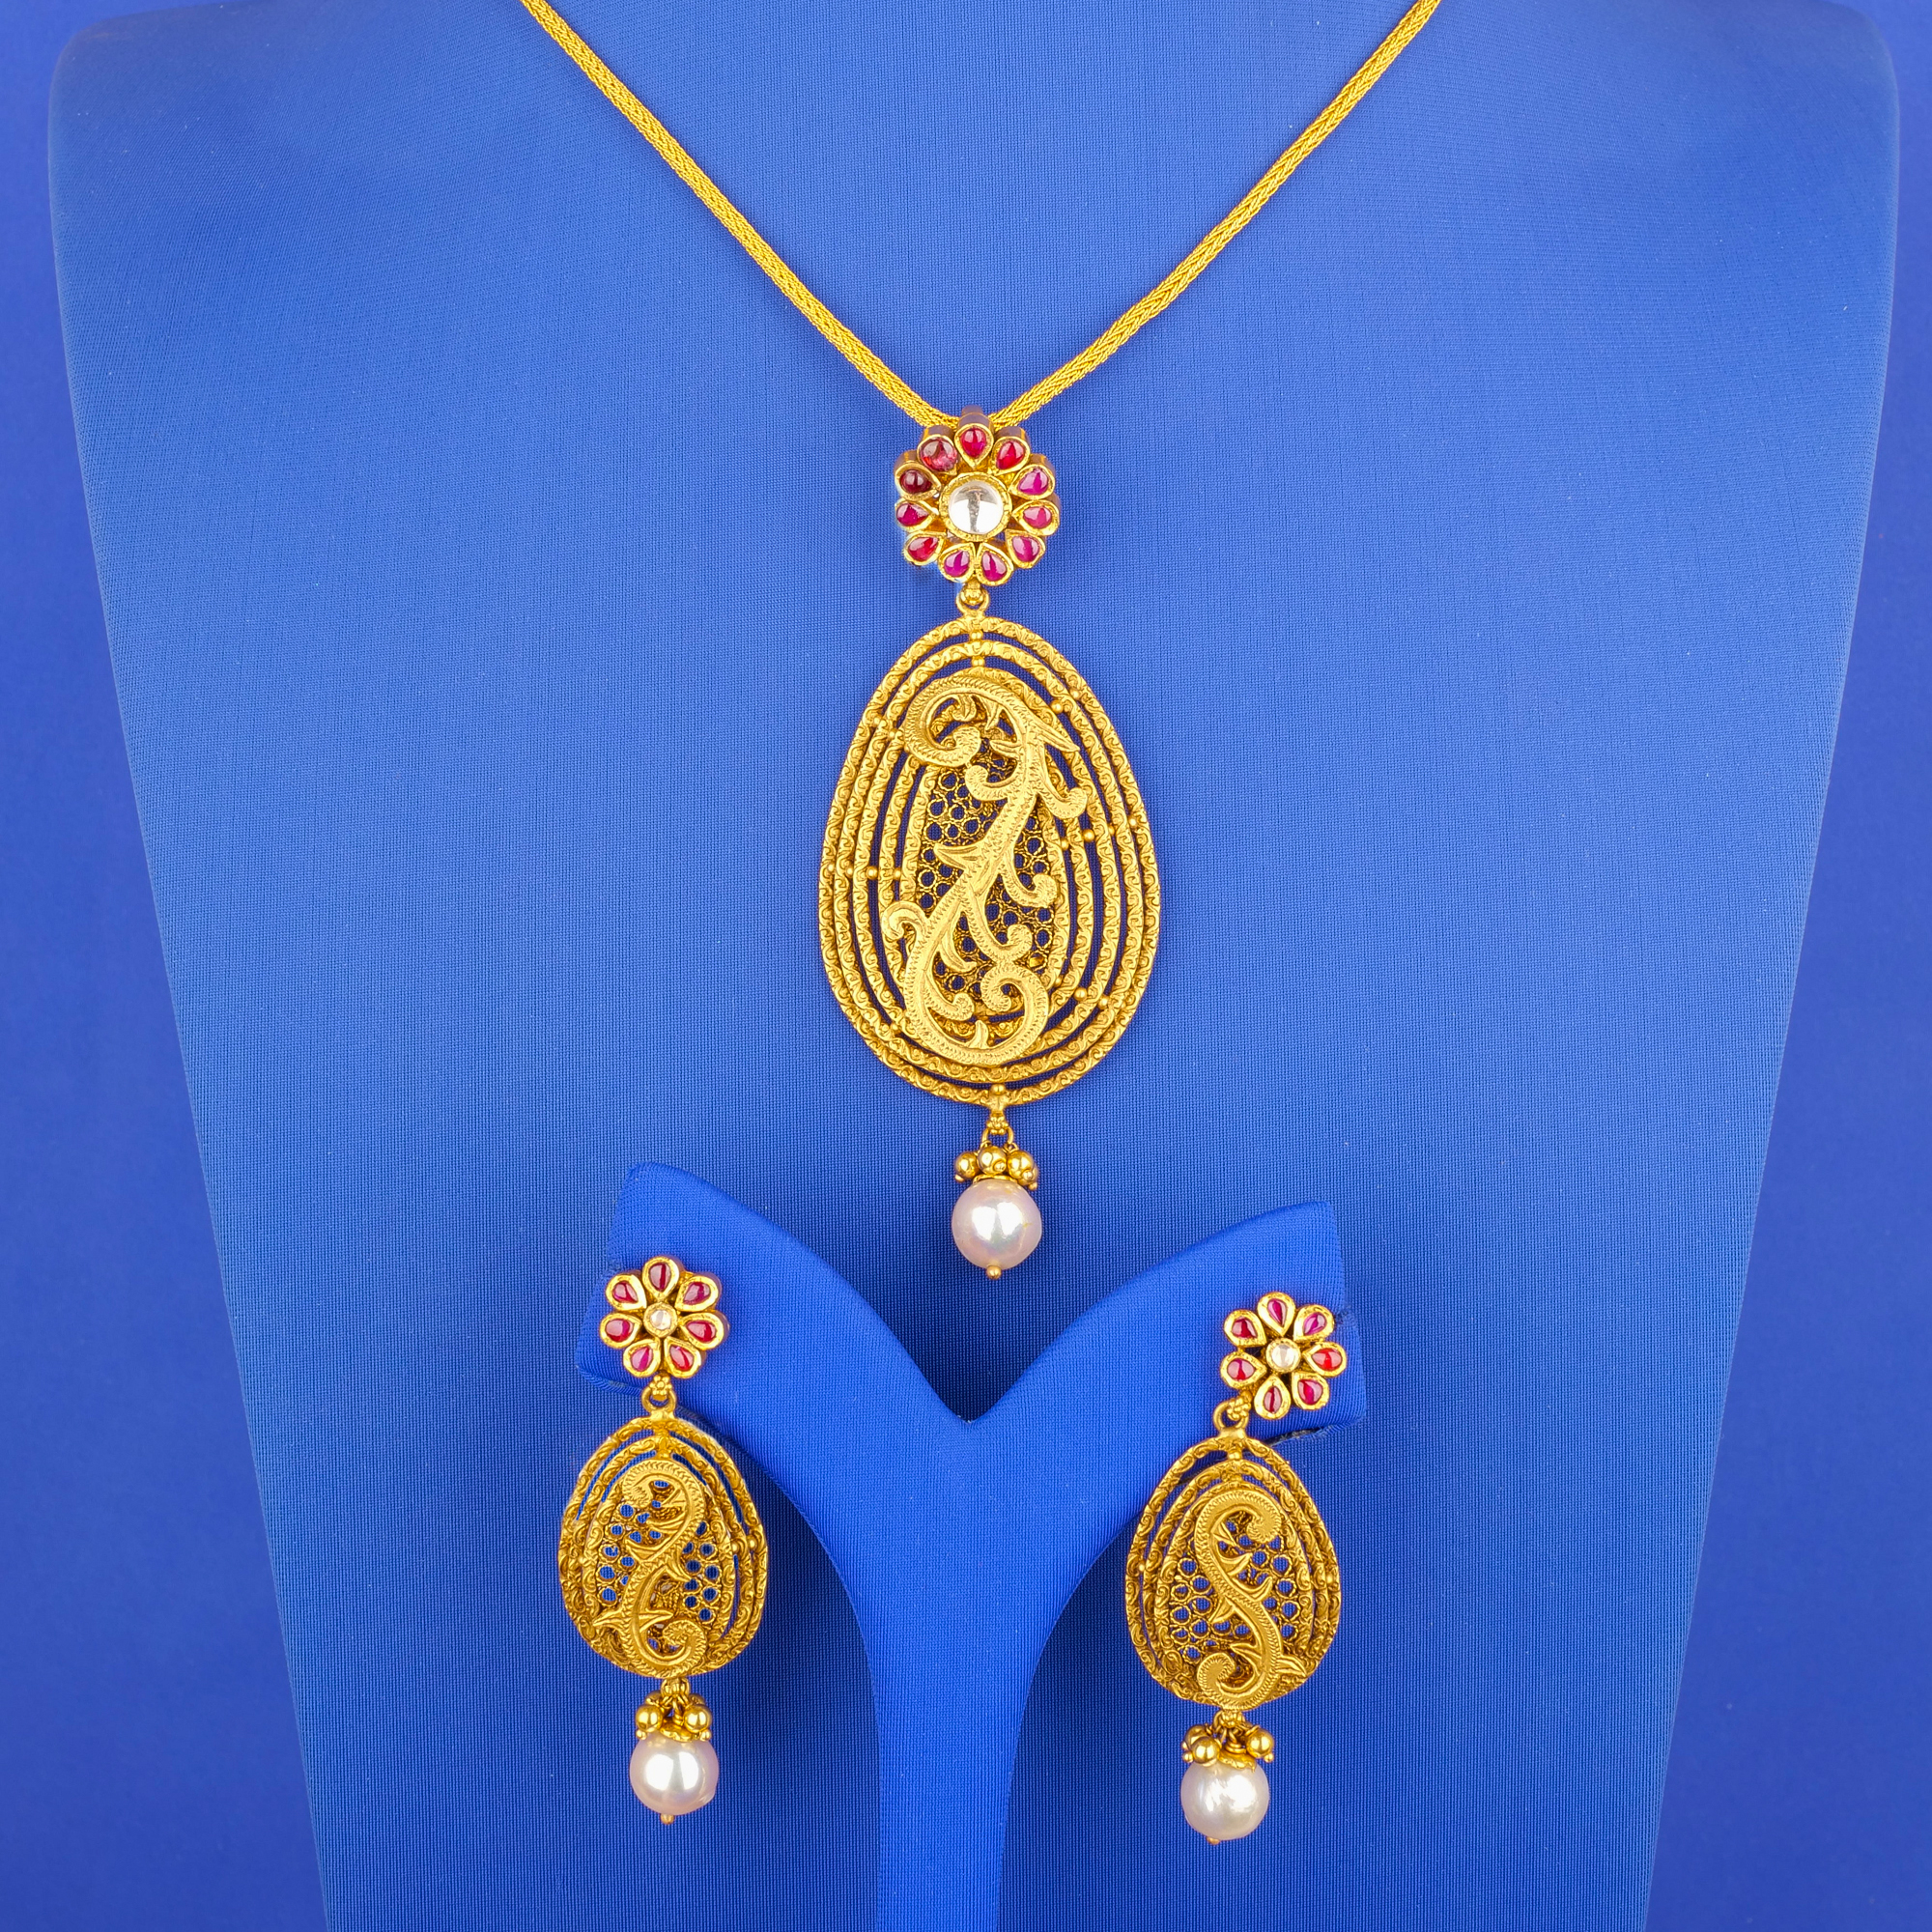  Handmade 22K Gold 'Antique' Pendant & Earrings Set (chain not included)